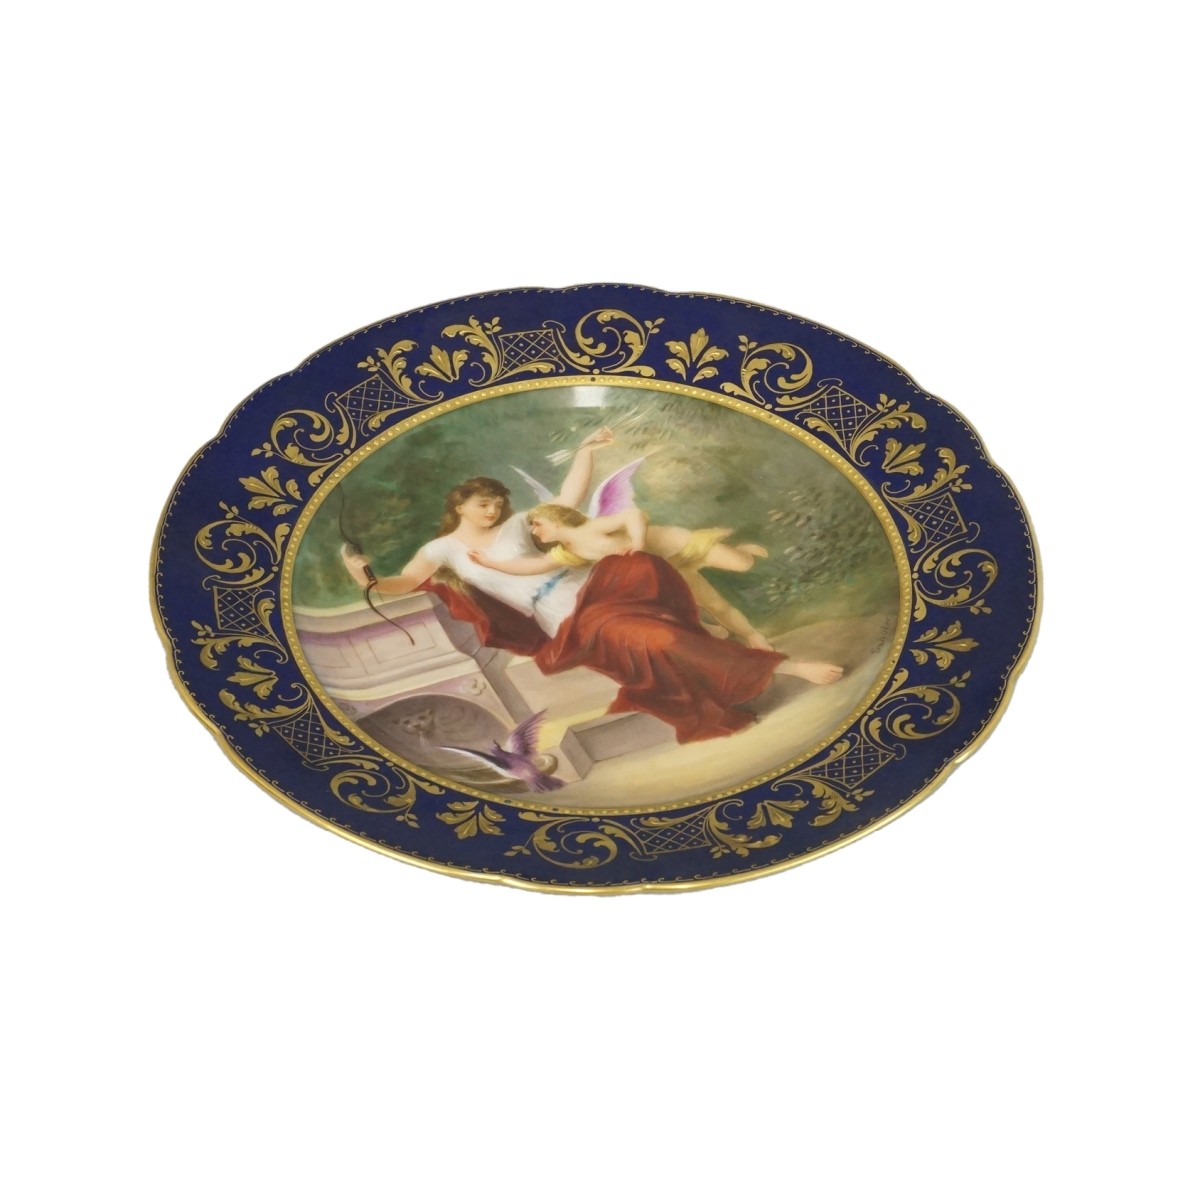 19C Royal Vienna Porcelain Plate "Amor"